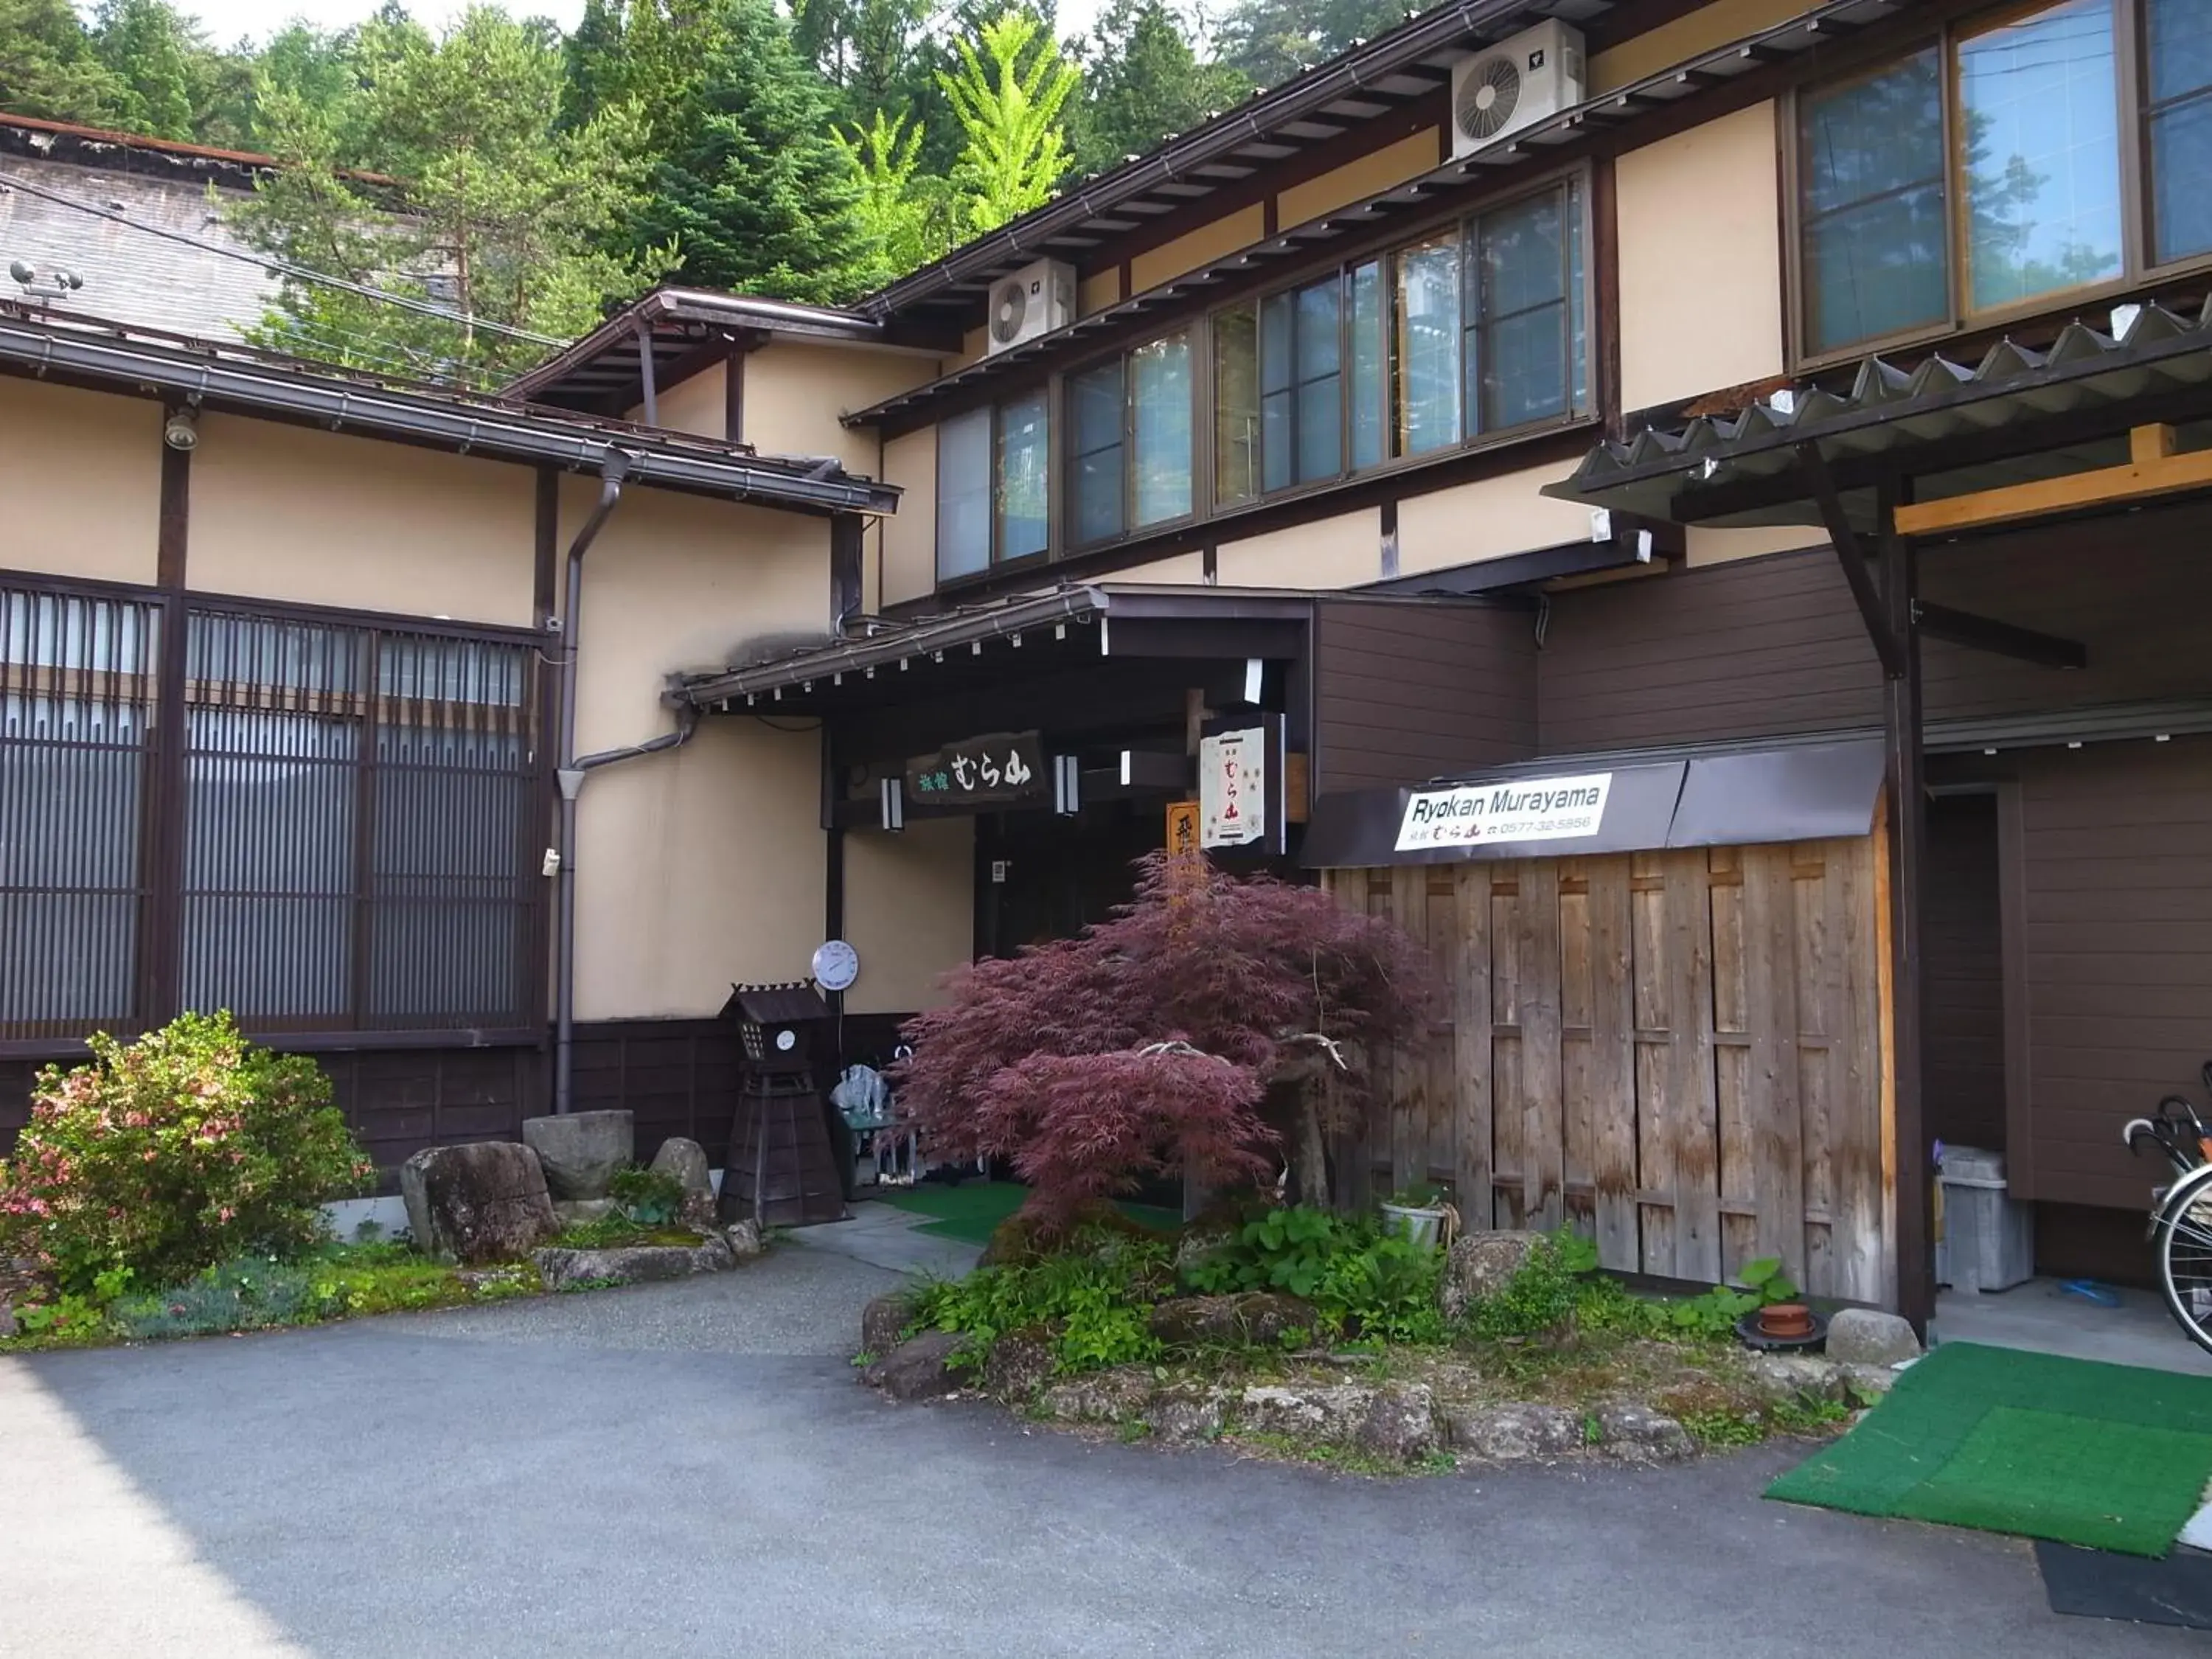 Facade/Entrance in Ryokan Murayama